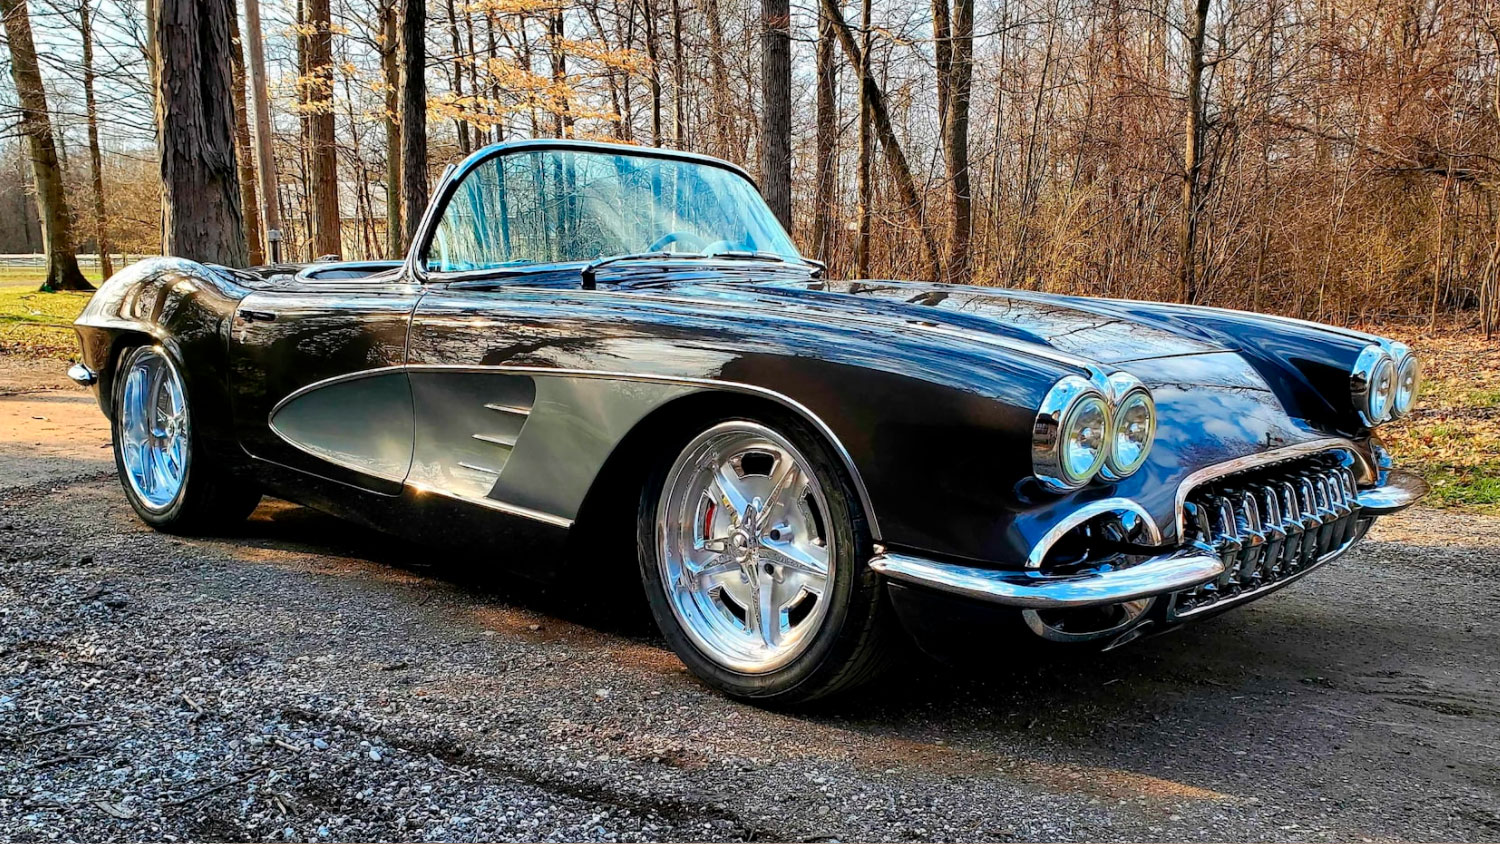 1961 Chevy Corvette Restomod Sold For $352K At Mecum: Video